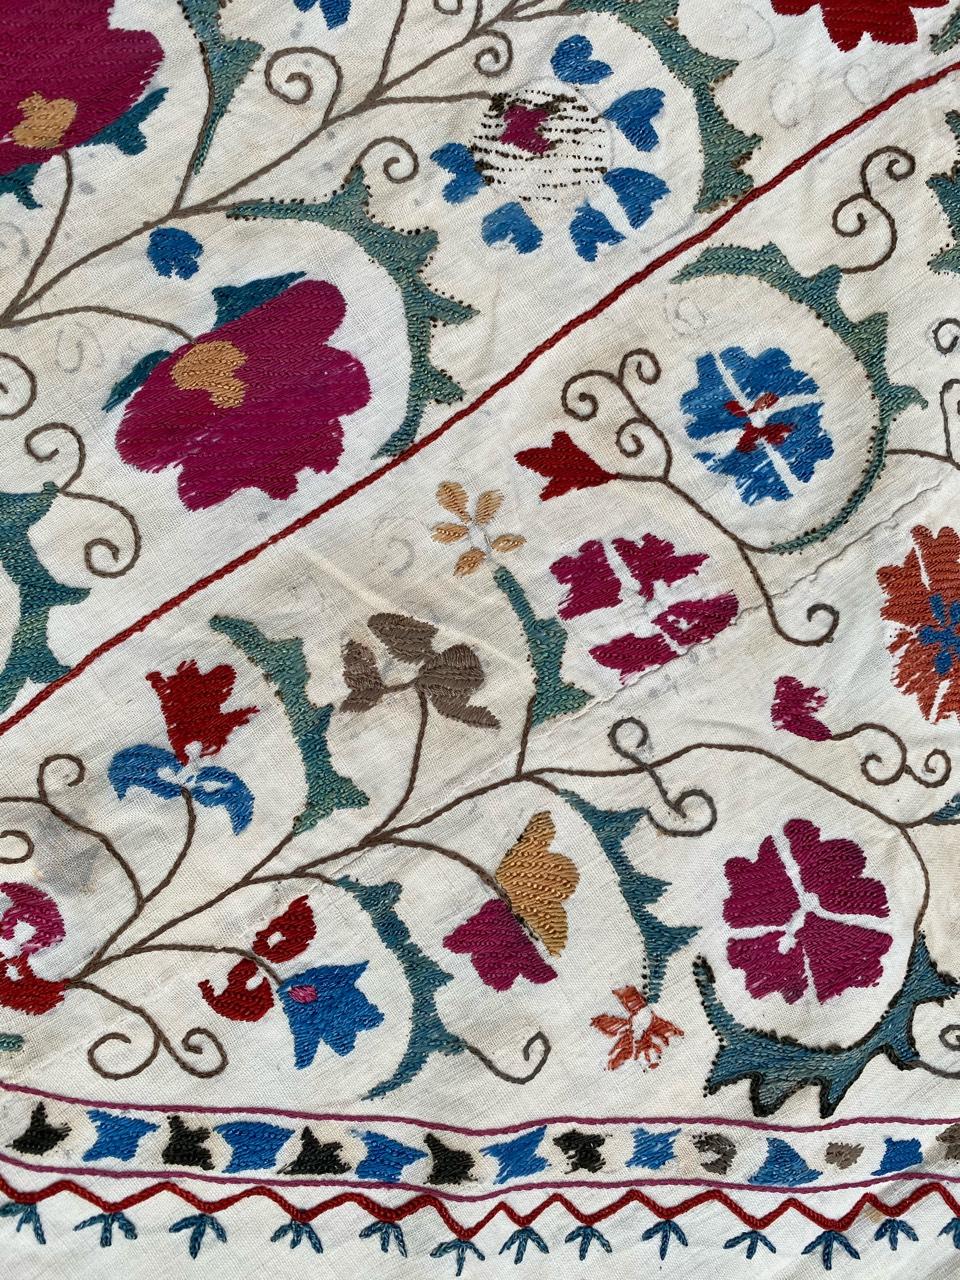 Embroidered Antique Uzbek Suzani Embroidery